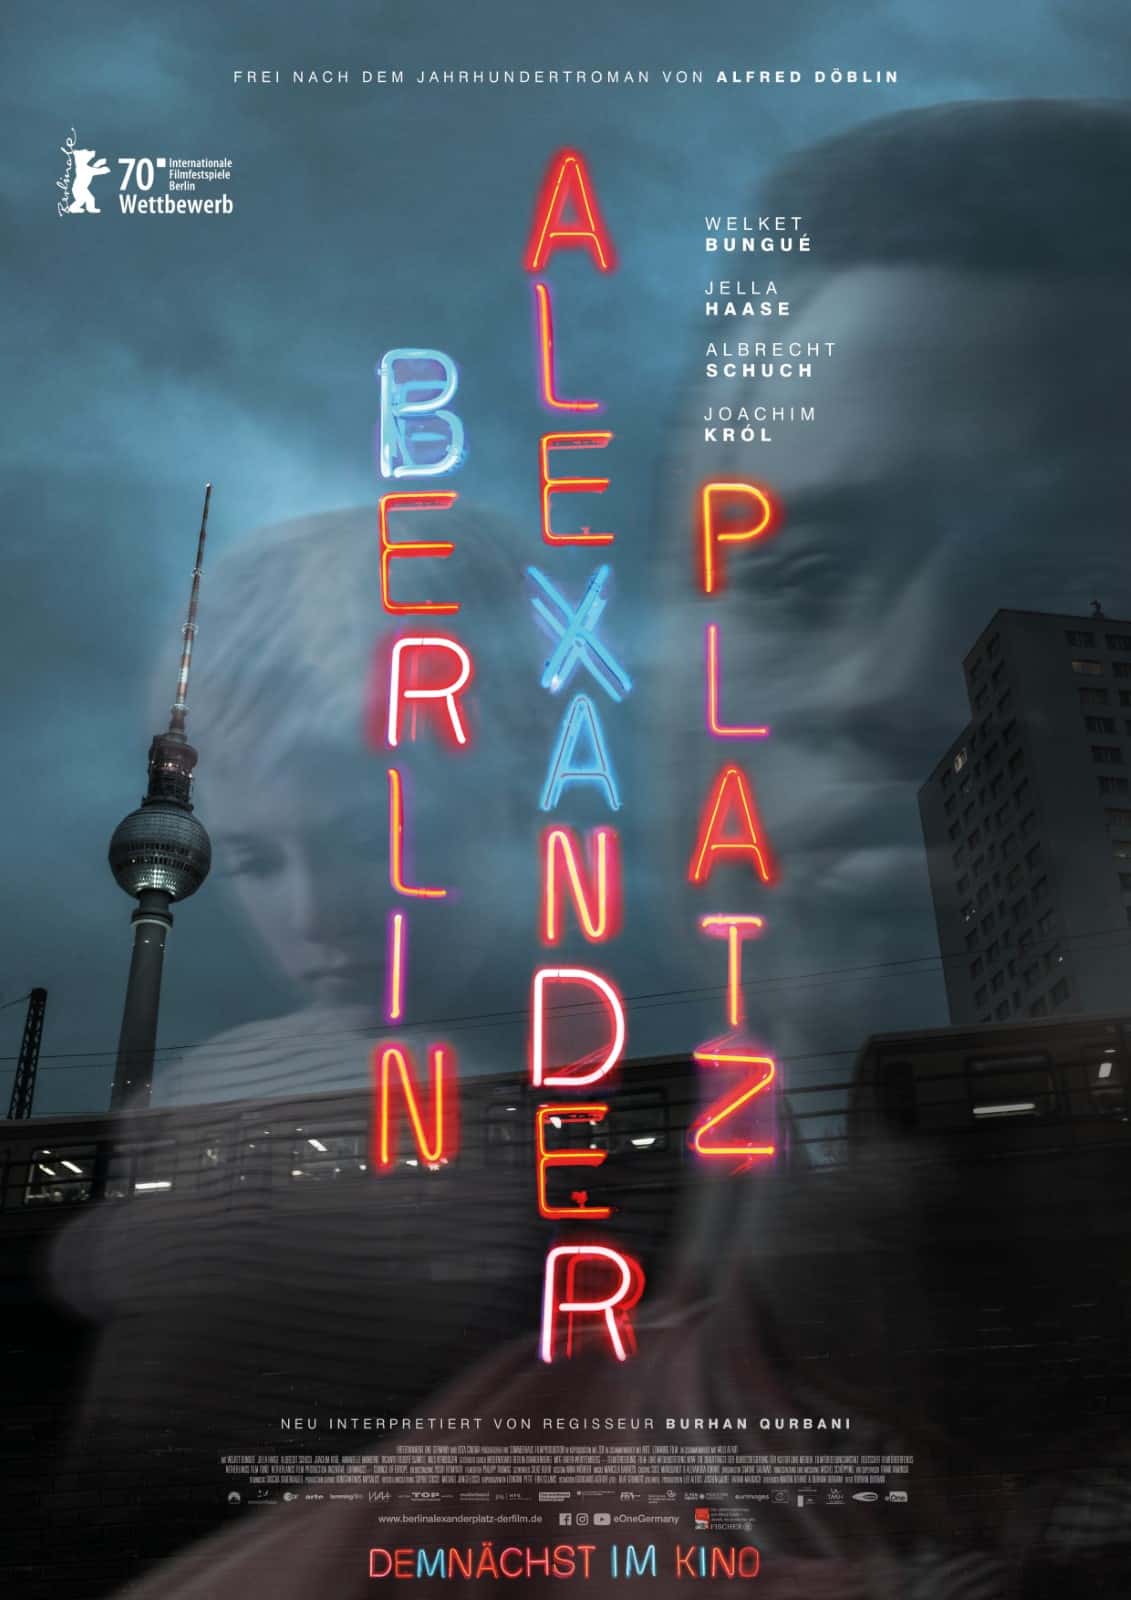 Sommerhaus Filmproduktion. Berlin Alexanderplatz. Berlinale 2020